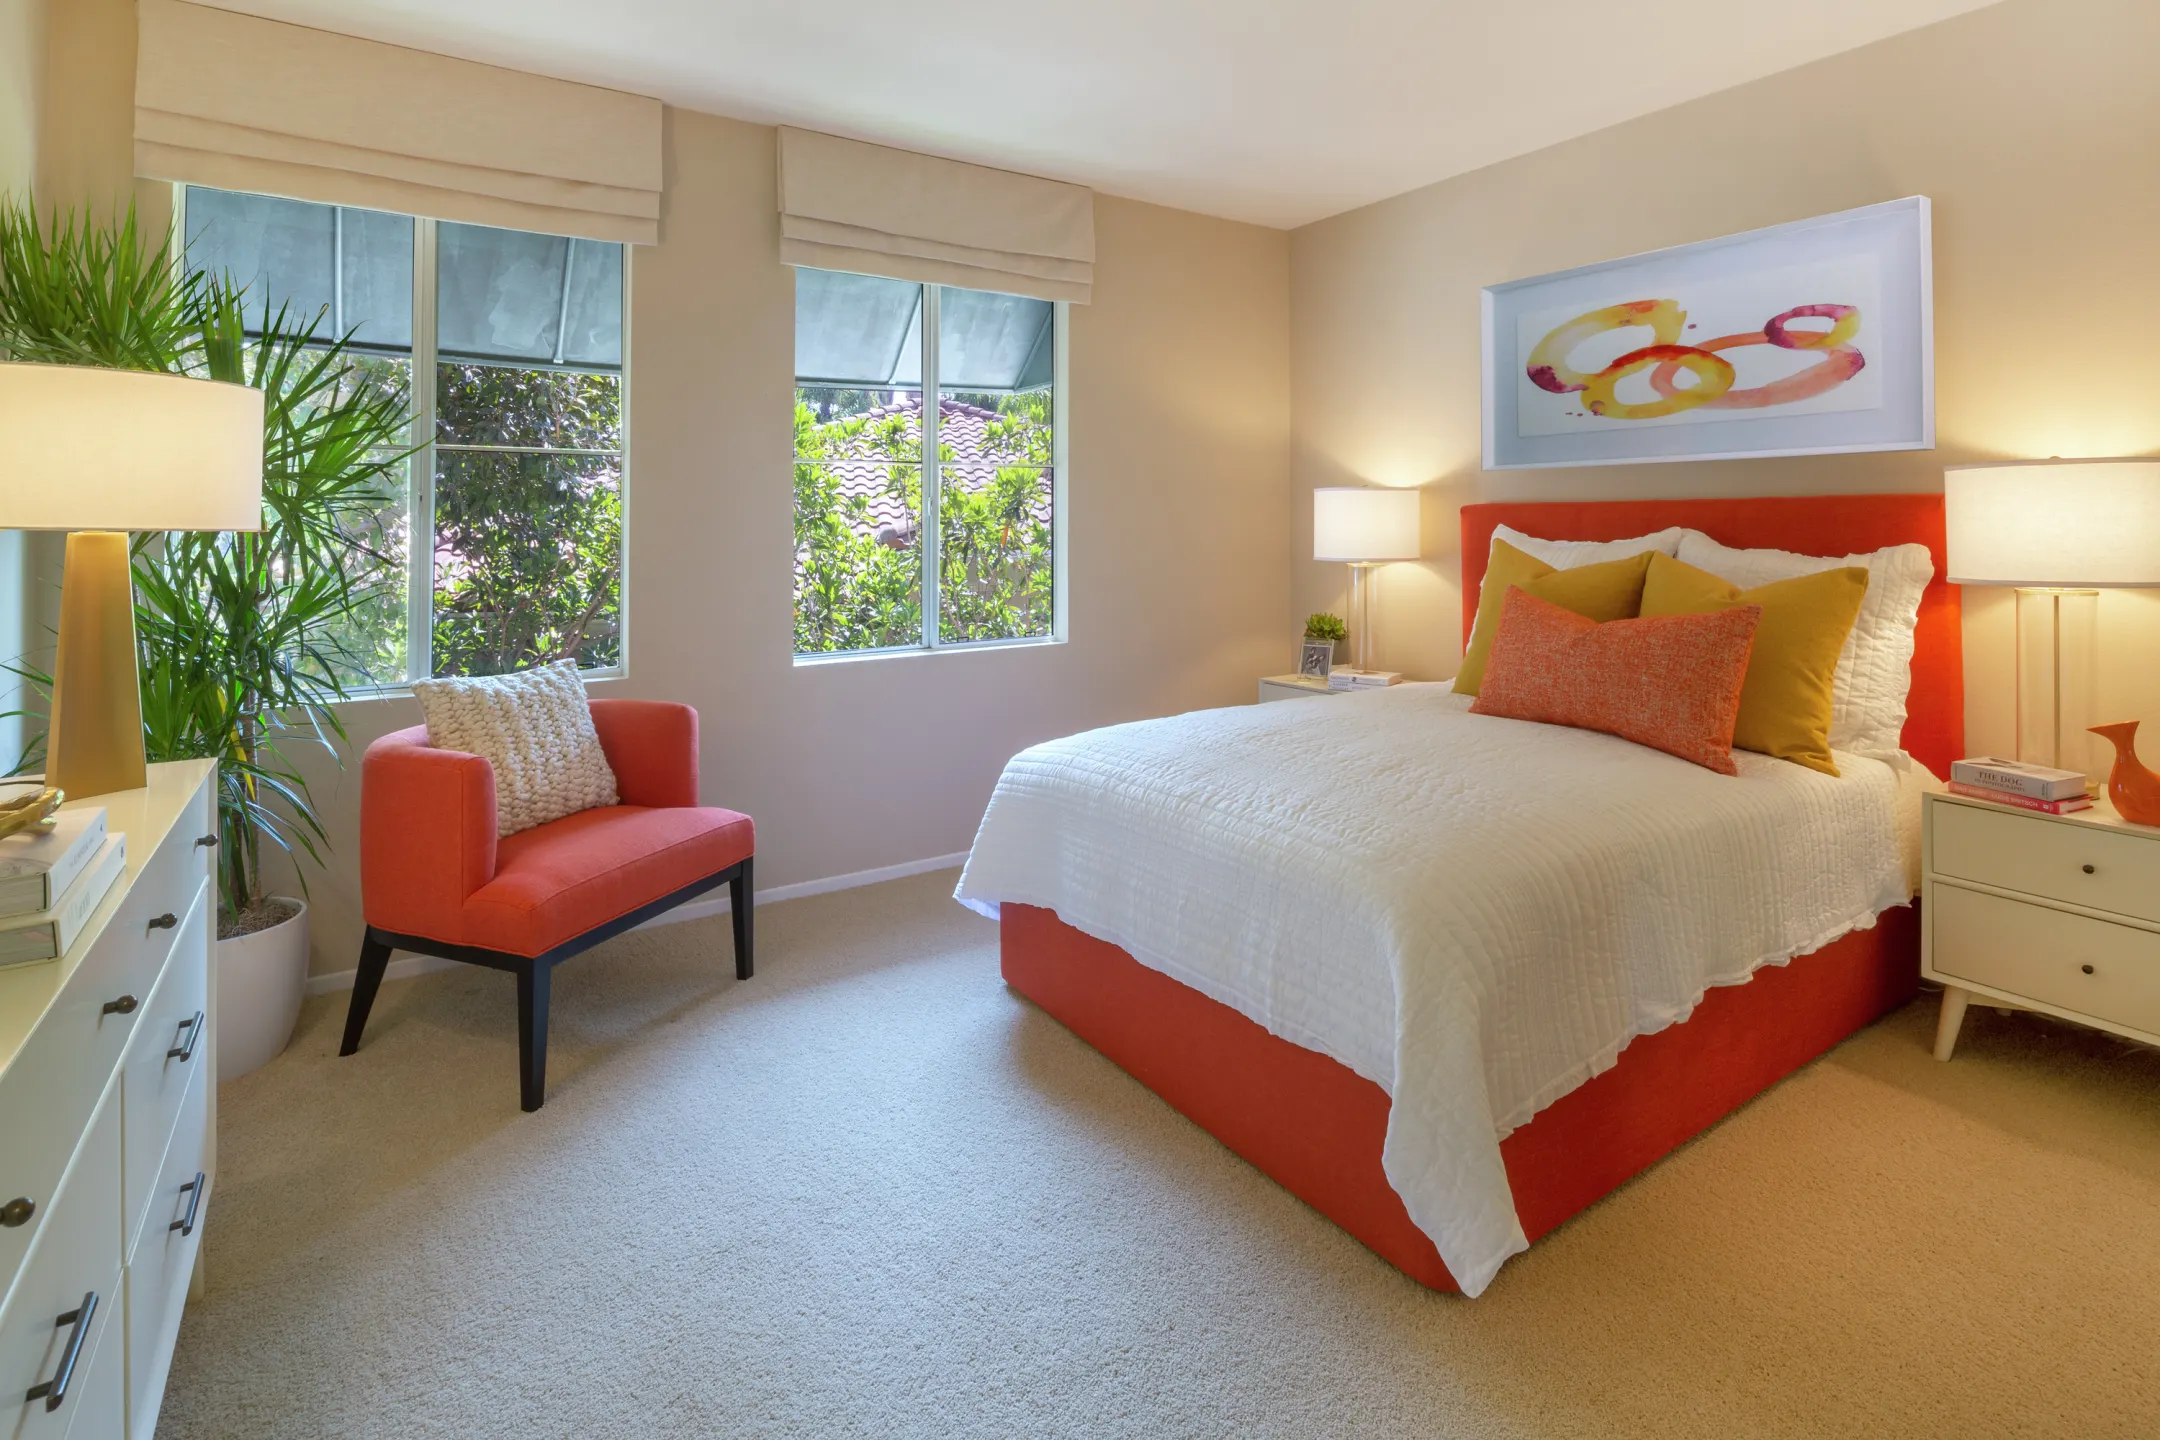 Bedroom - Santa Clara - Irvine, CA